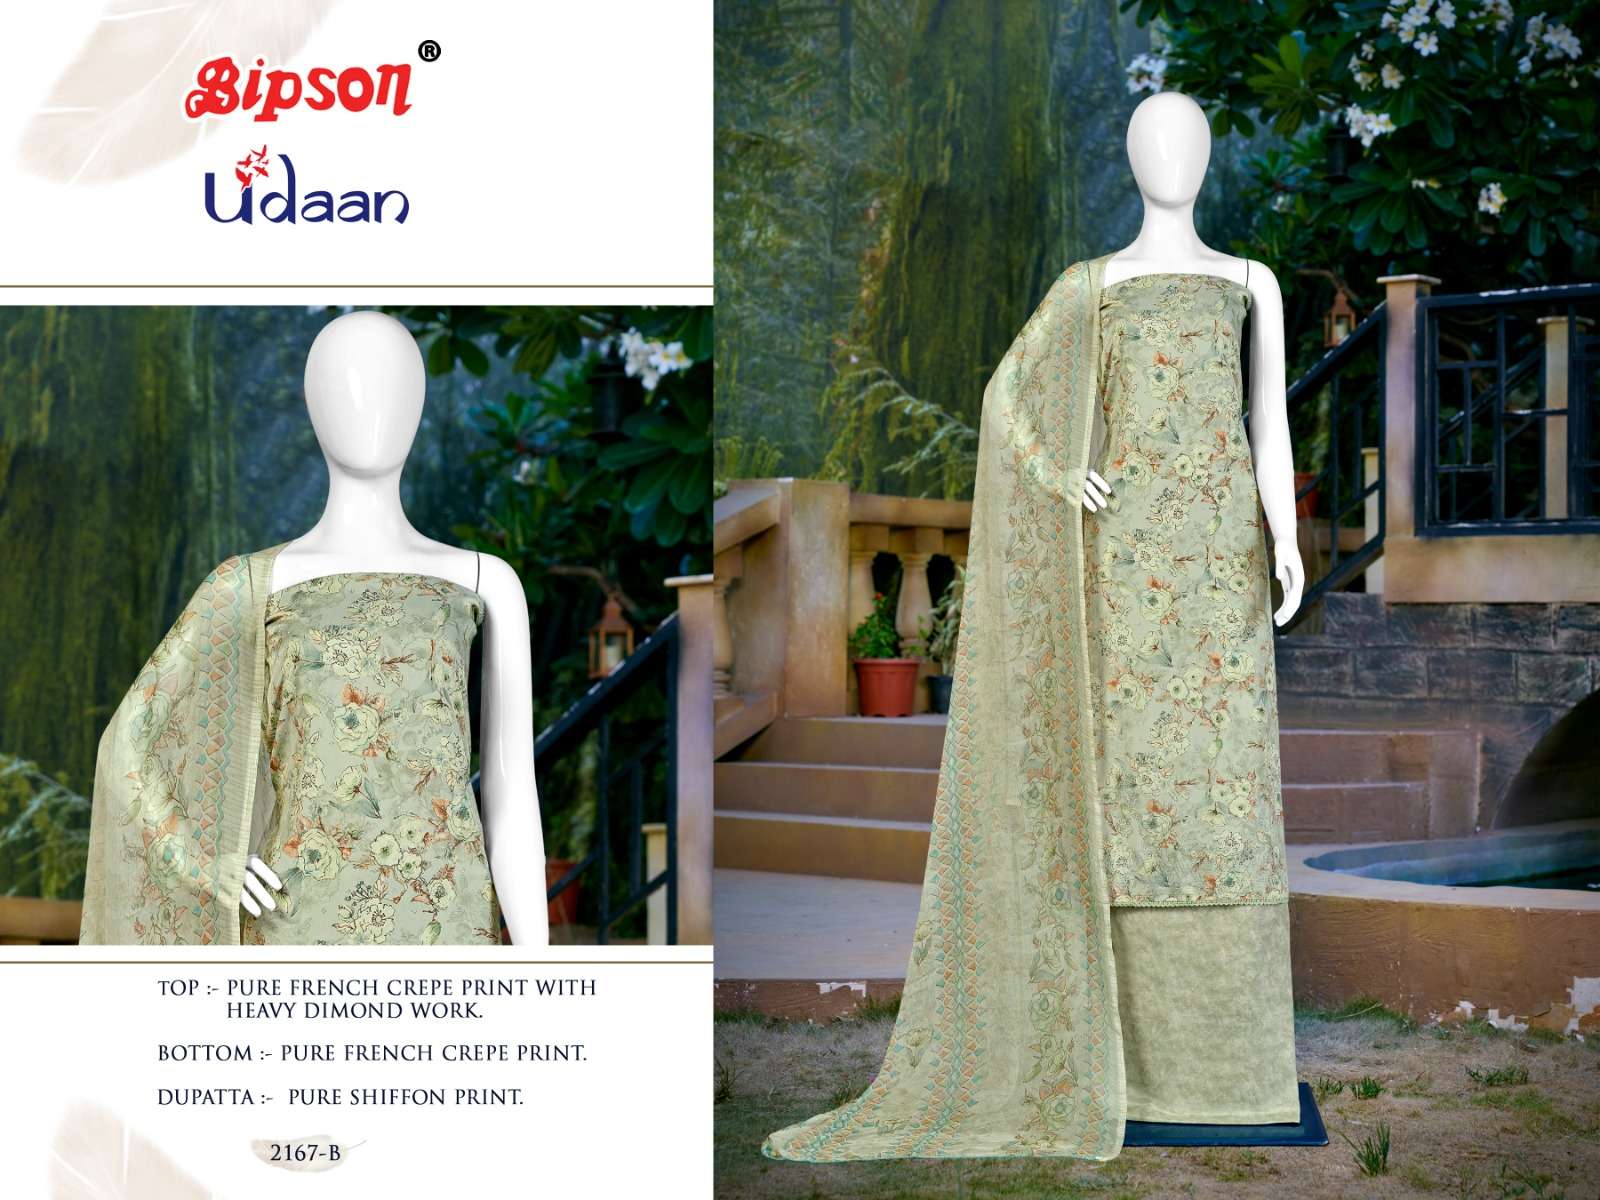 bipson prints udaan 2167 colour pakistani designer salwar kameez wholesale price surat gujarat